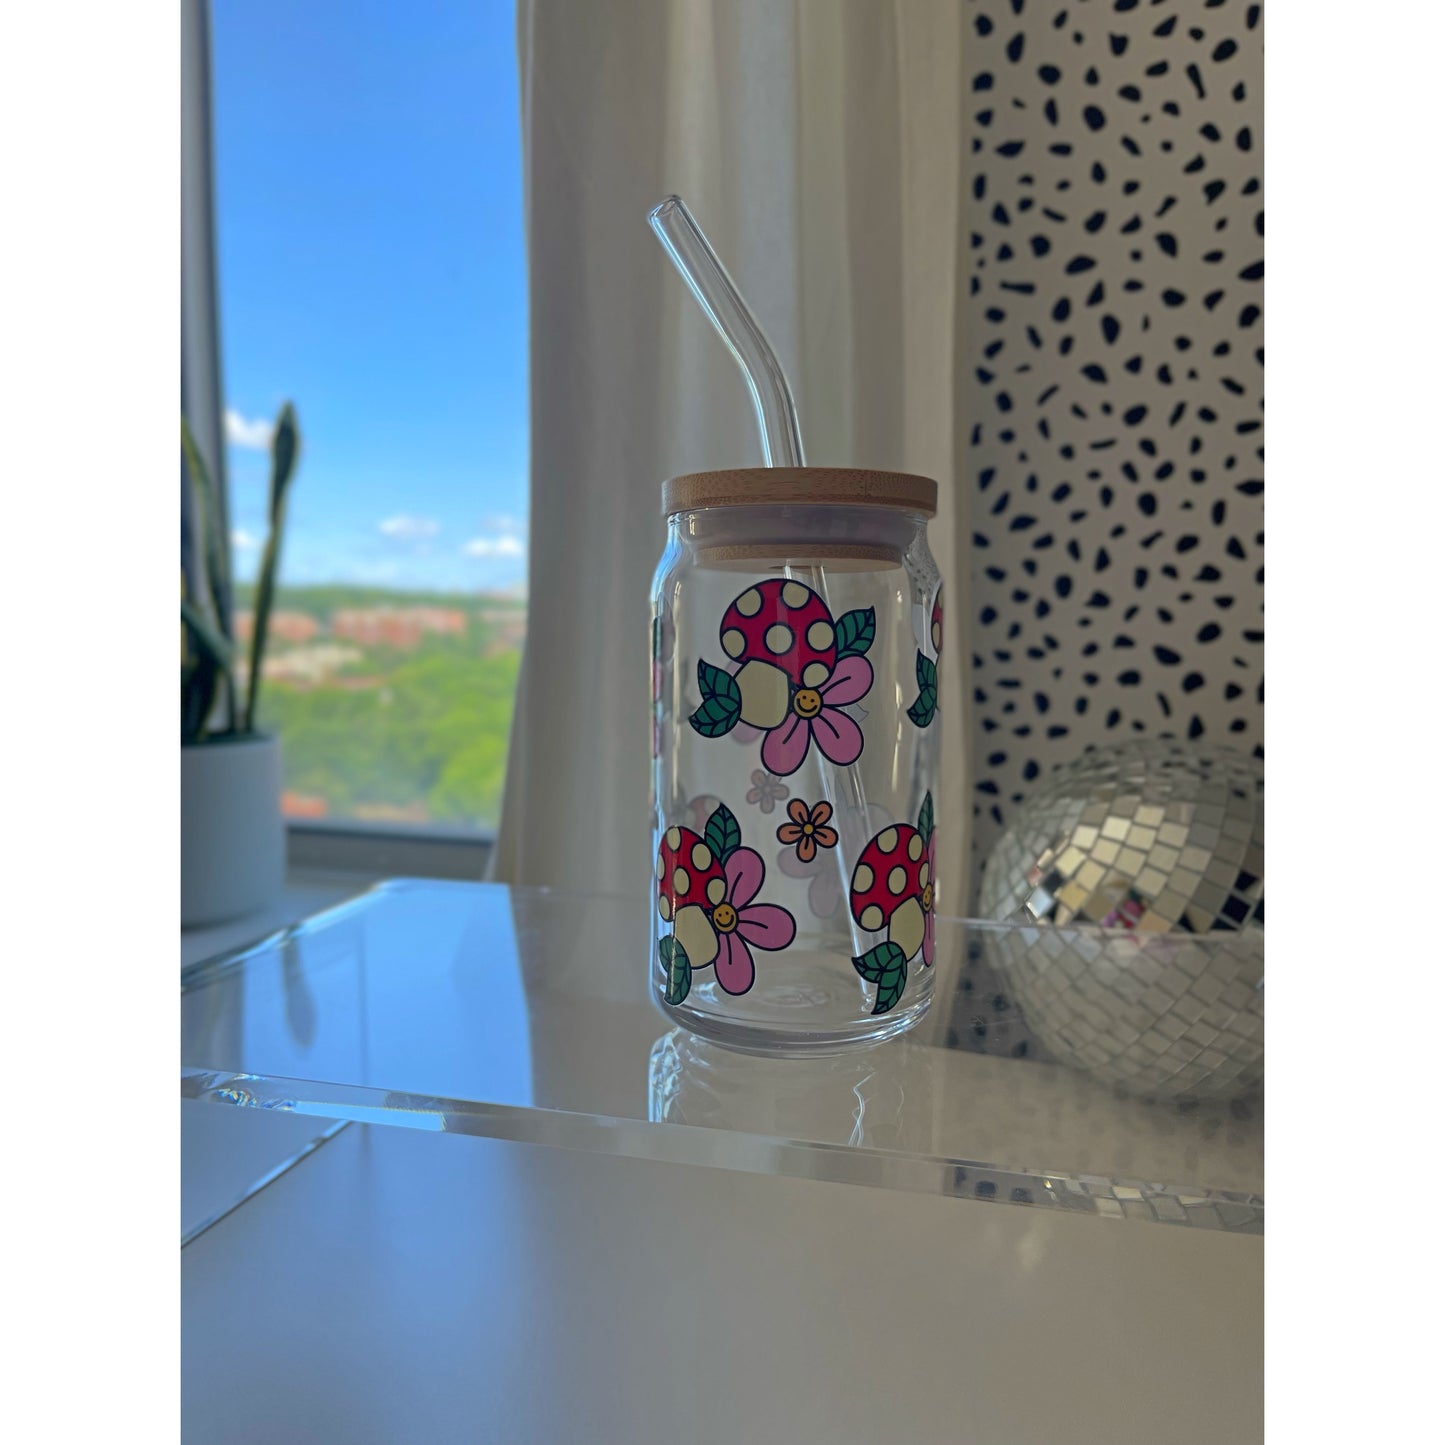 Mushroom/flowers glass can